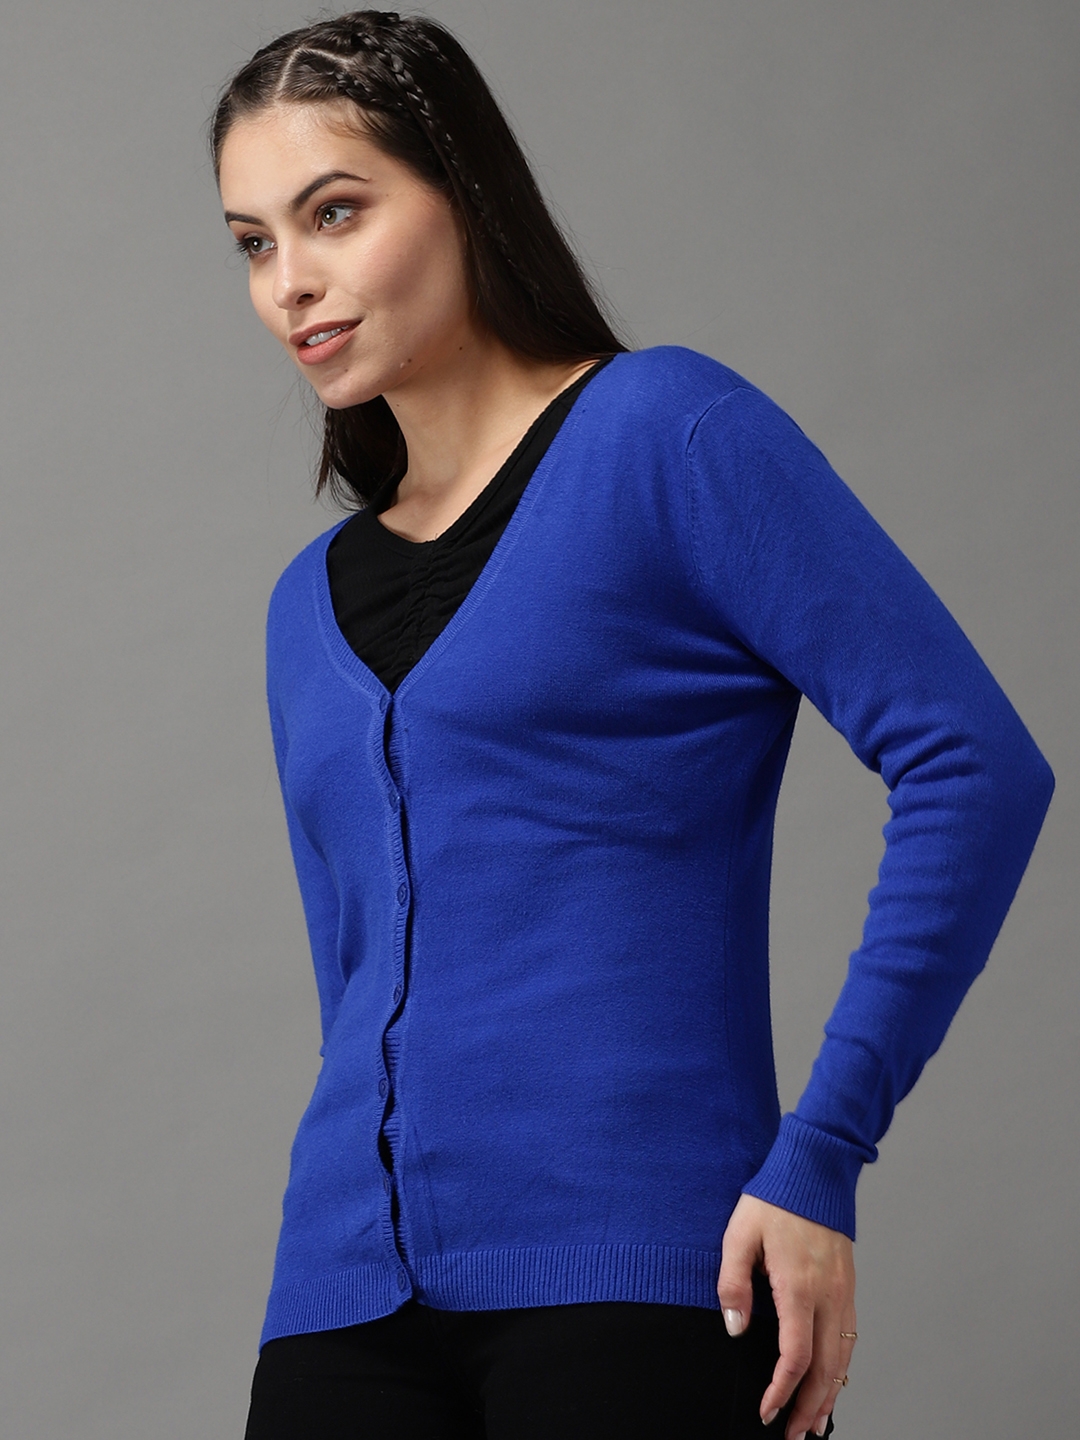 Women's Blue Acrylic Solid Sweaters